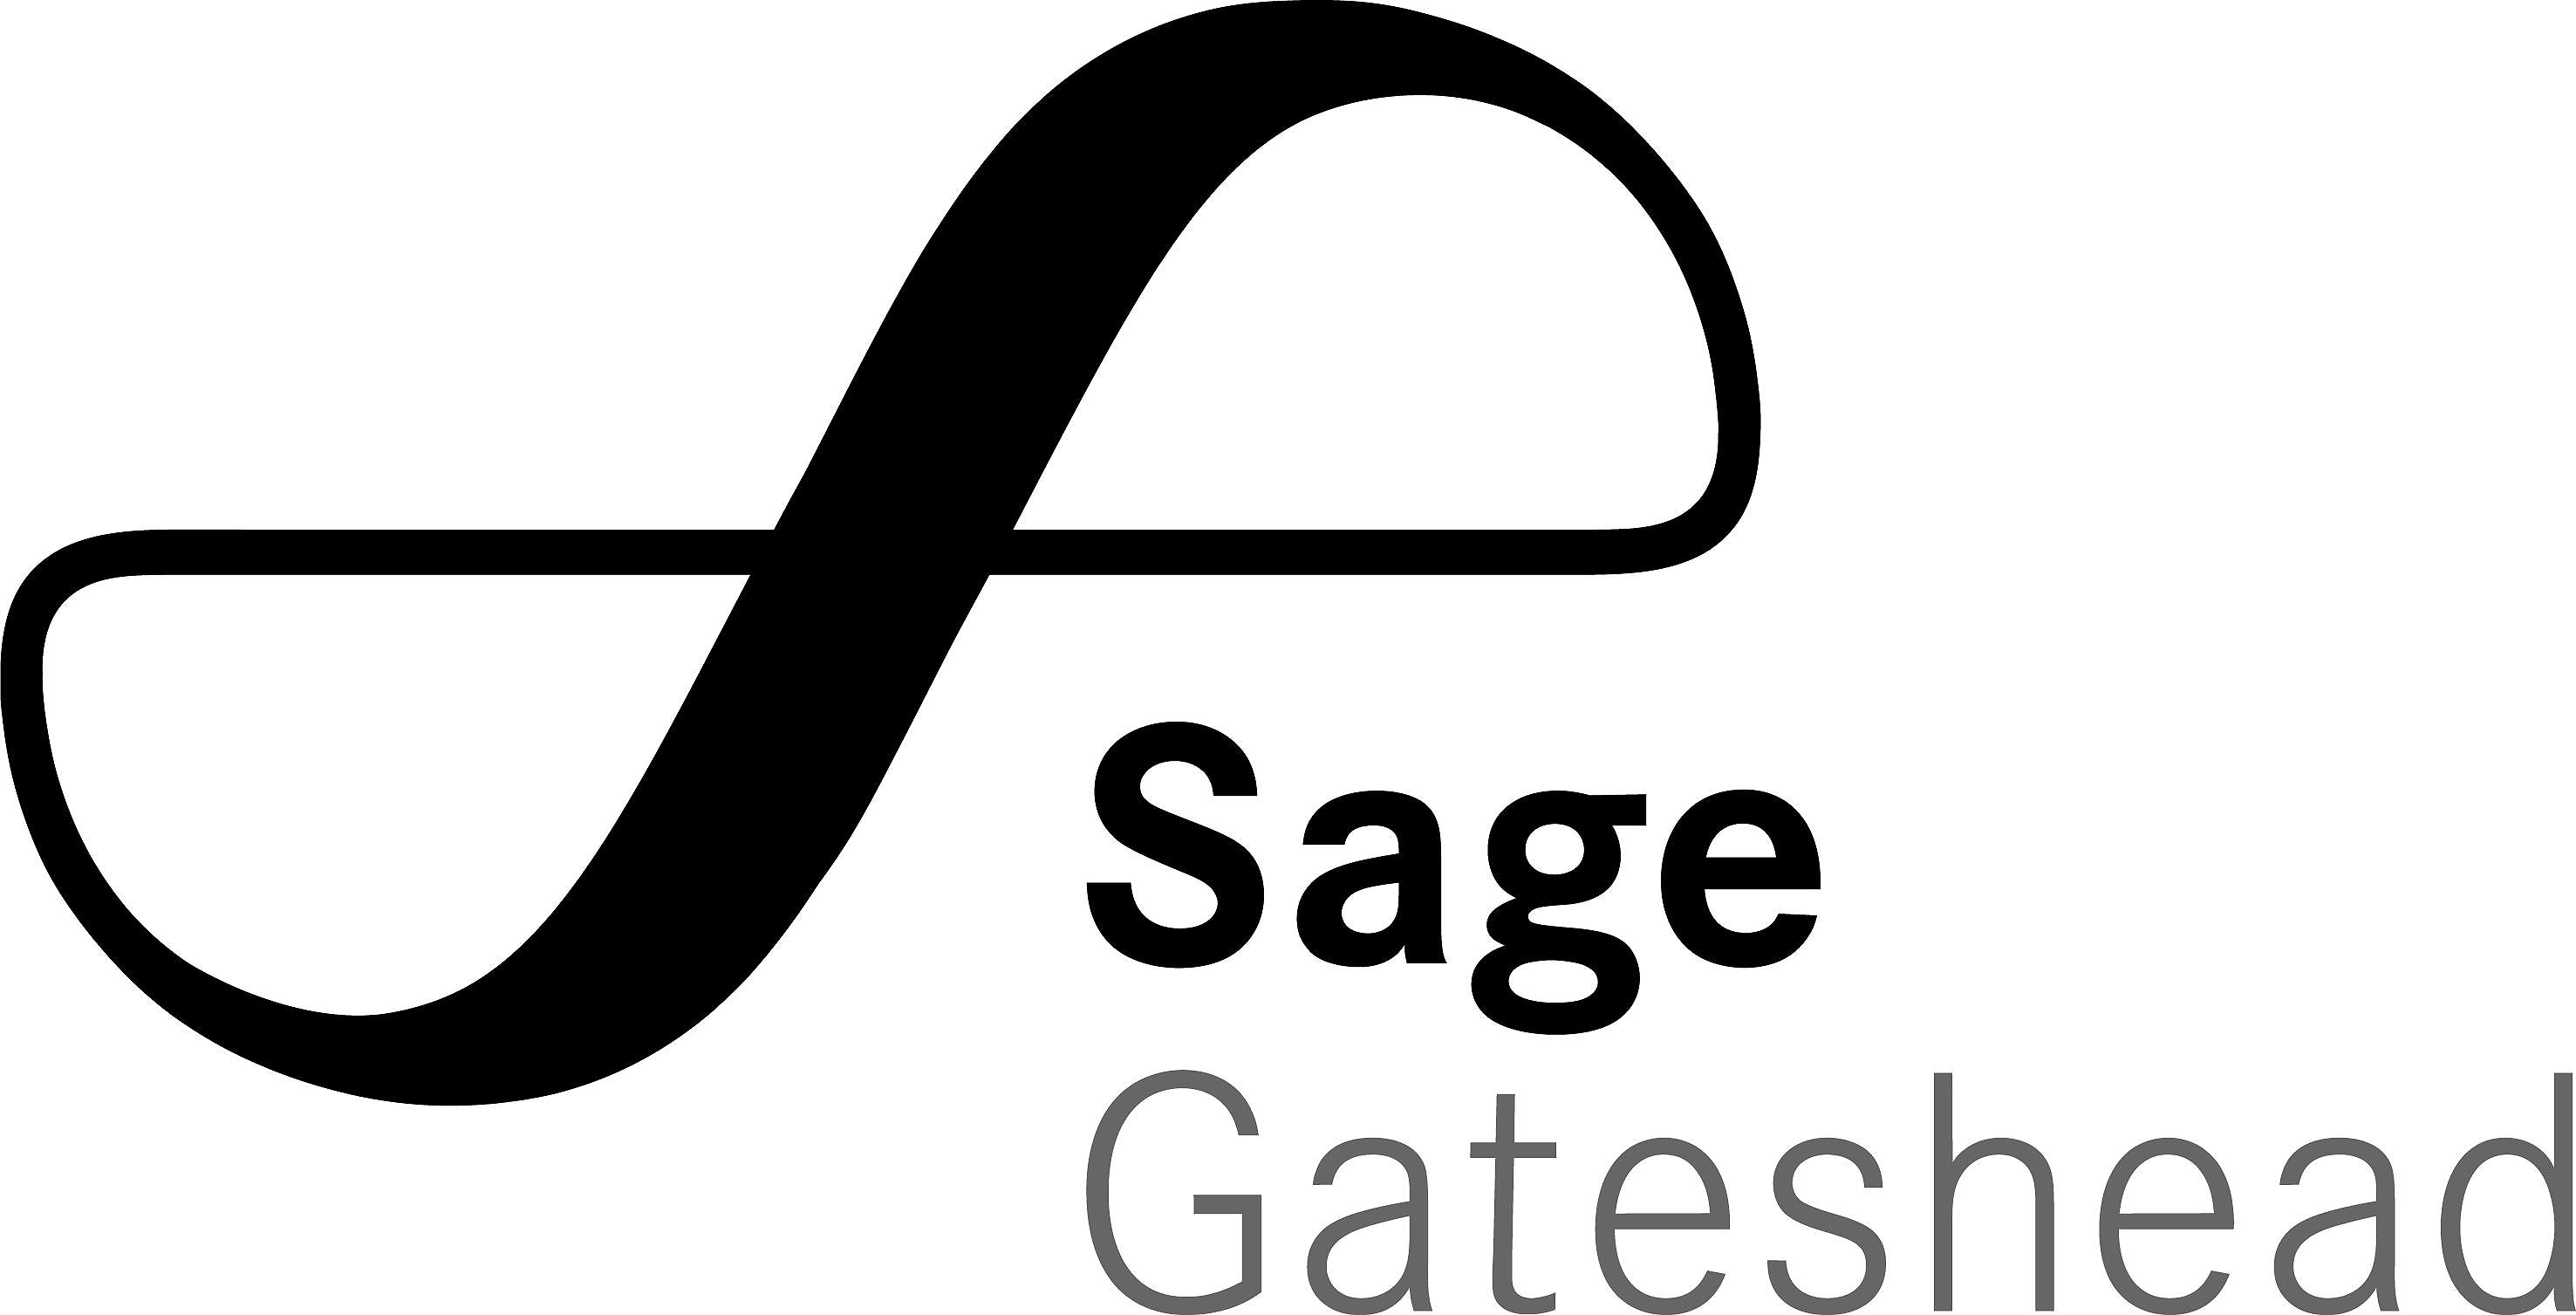 The Sage Gateshead logo